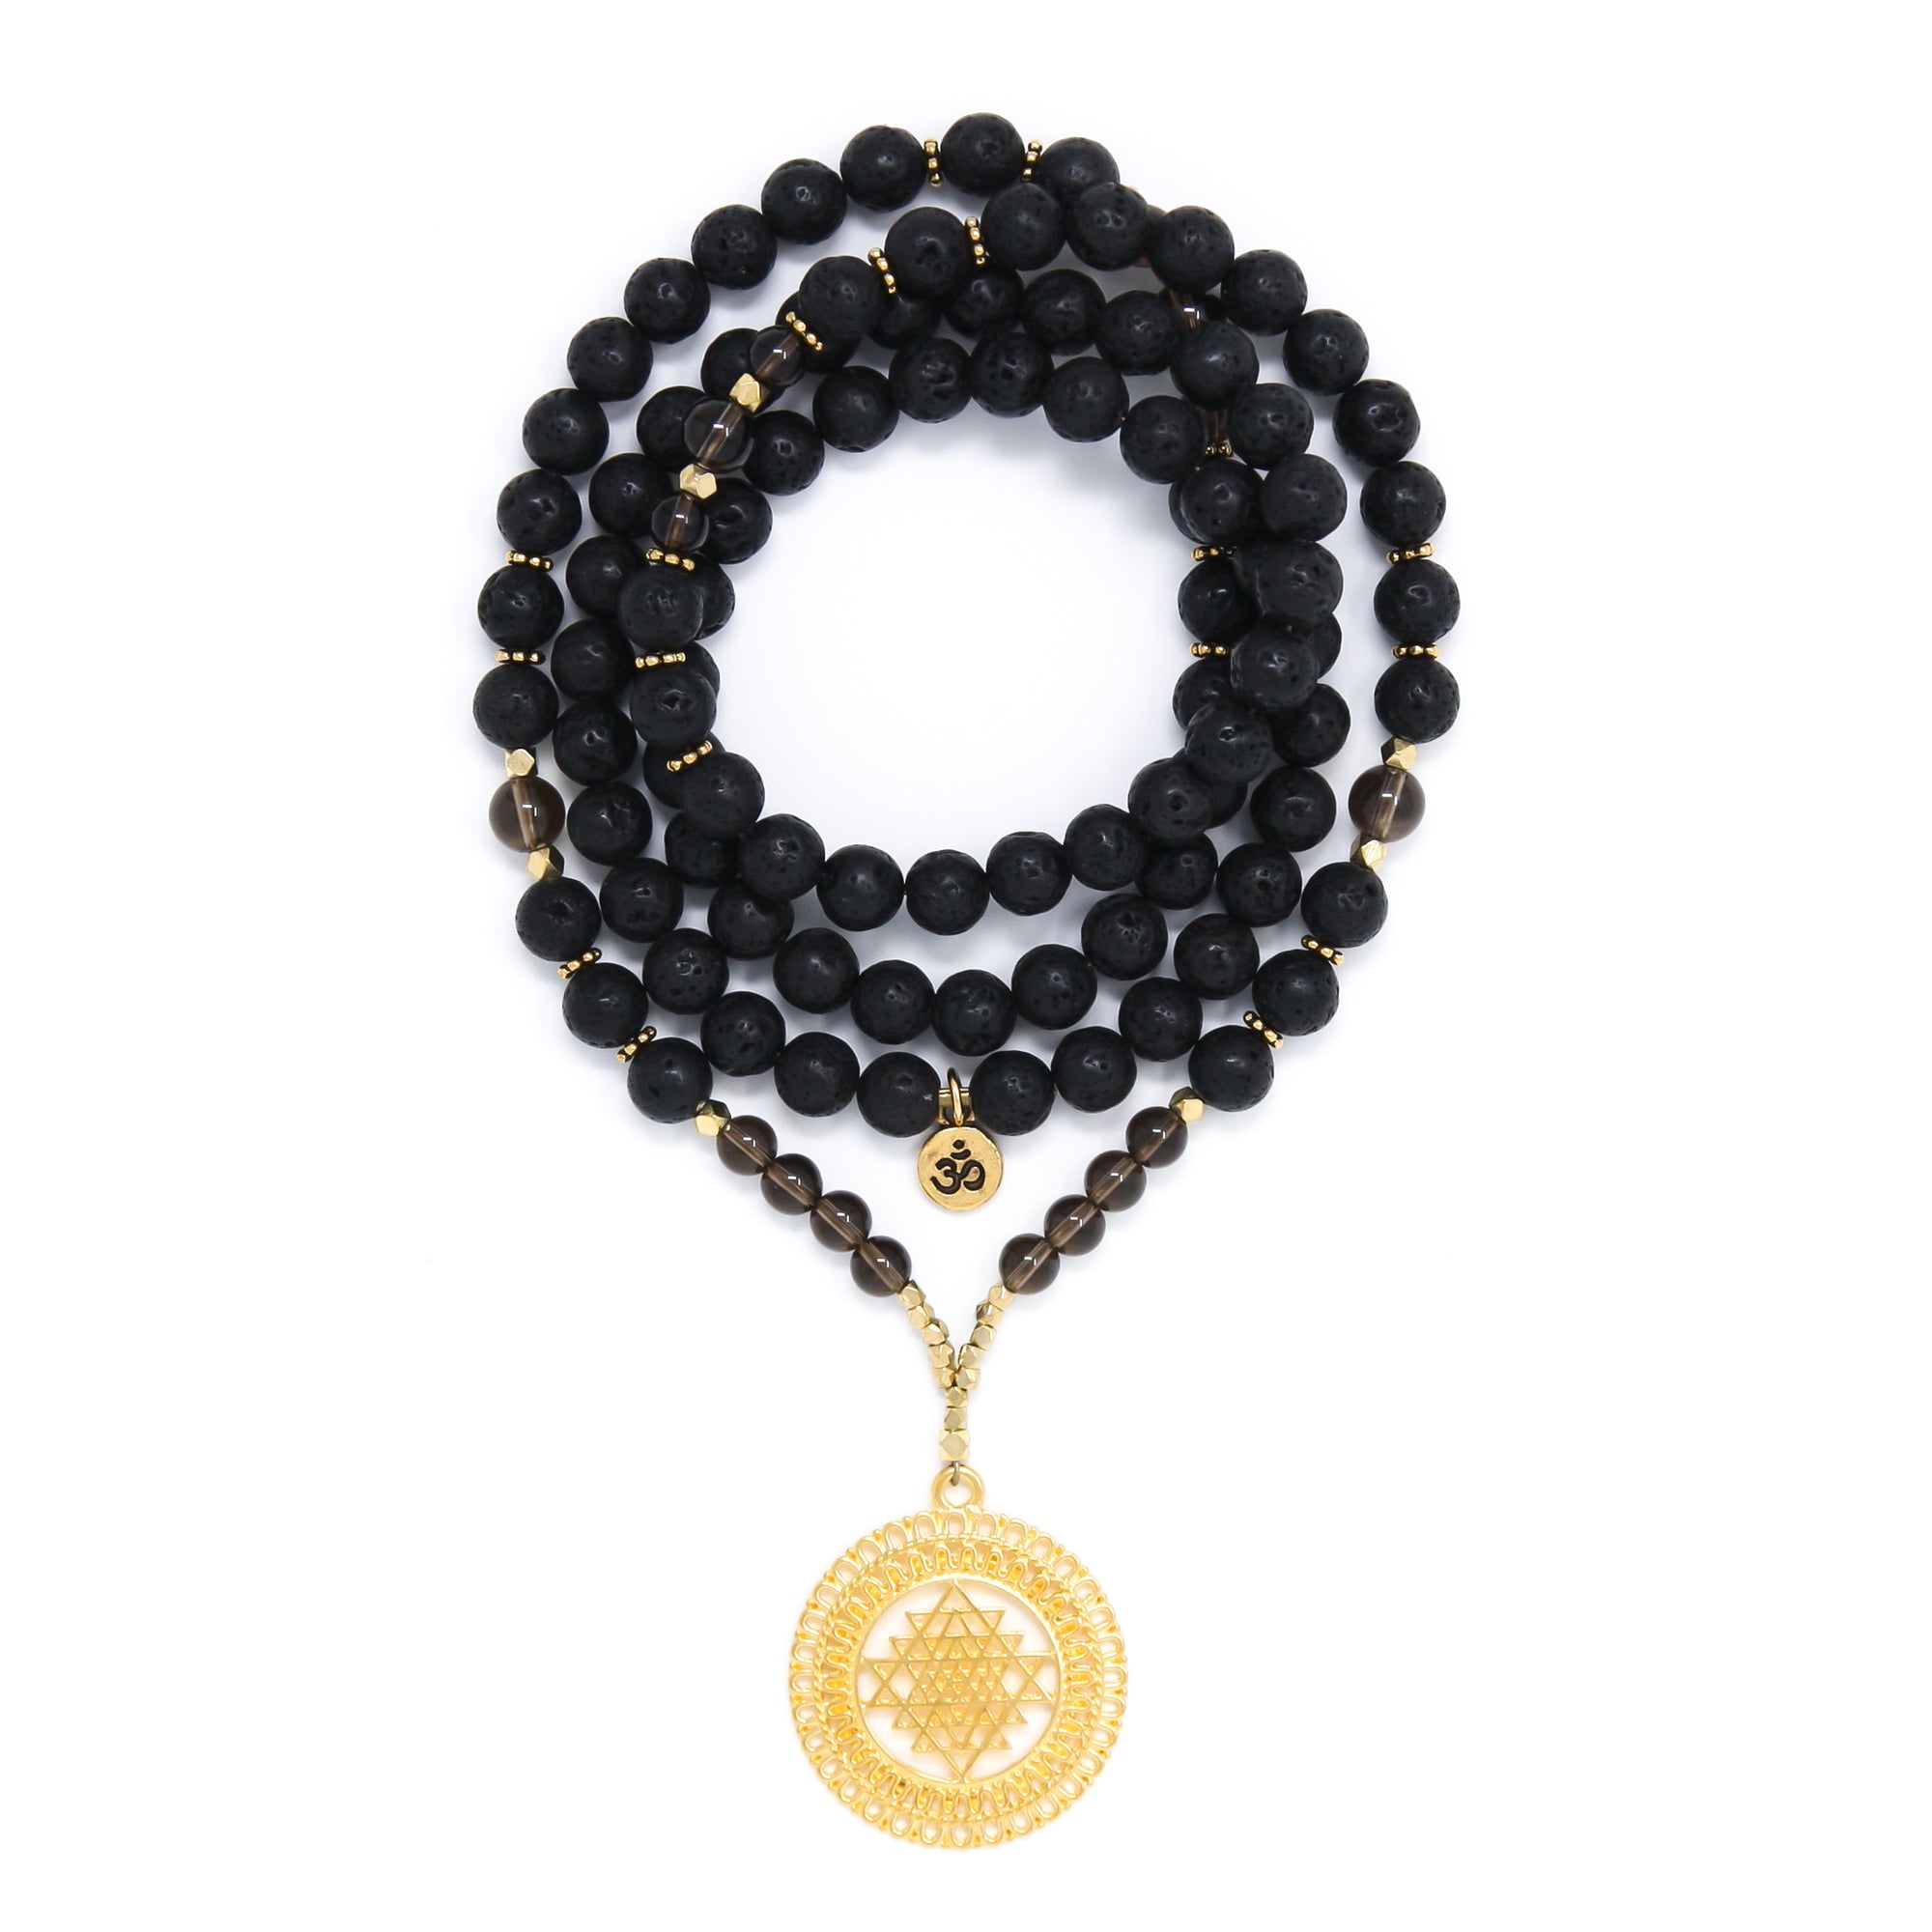 Black Lava and Smoky Quartz Mala Necklace with Gold Sri Yantra Pendant, black, brown and gold mala beads, yoga jewelry